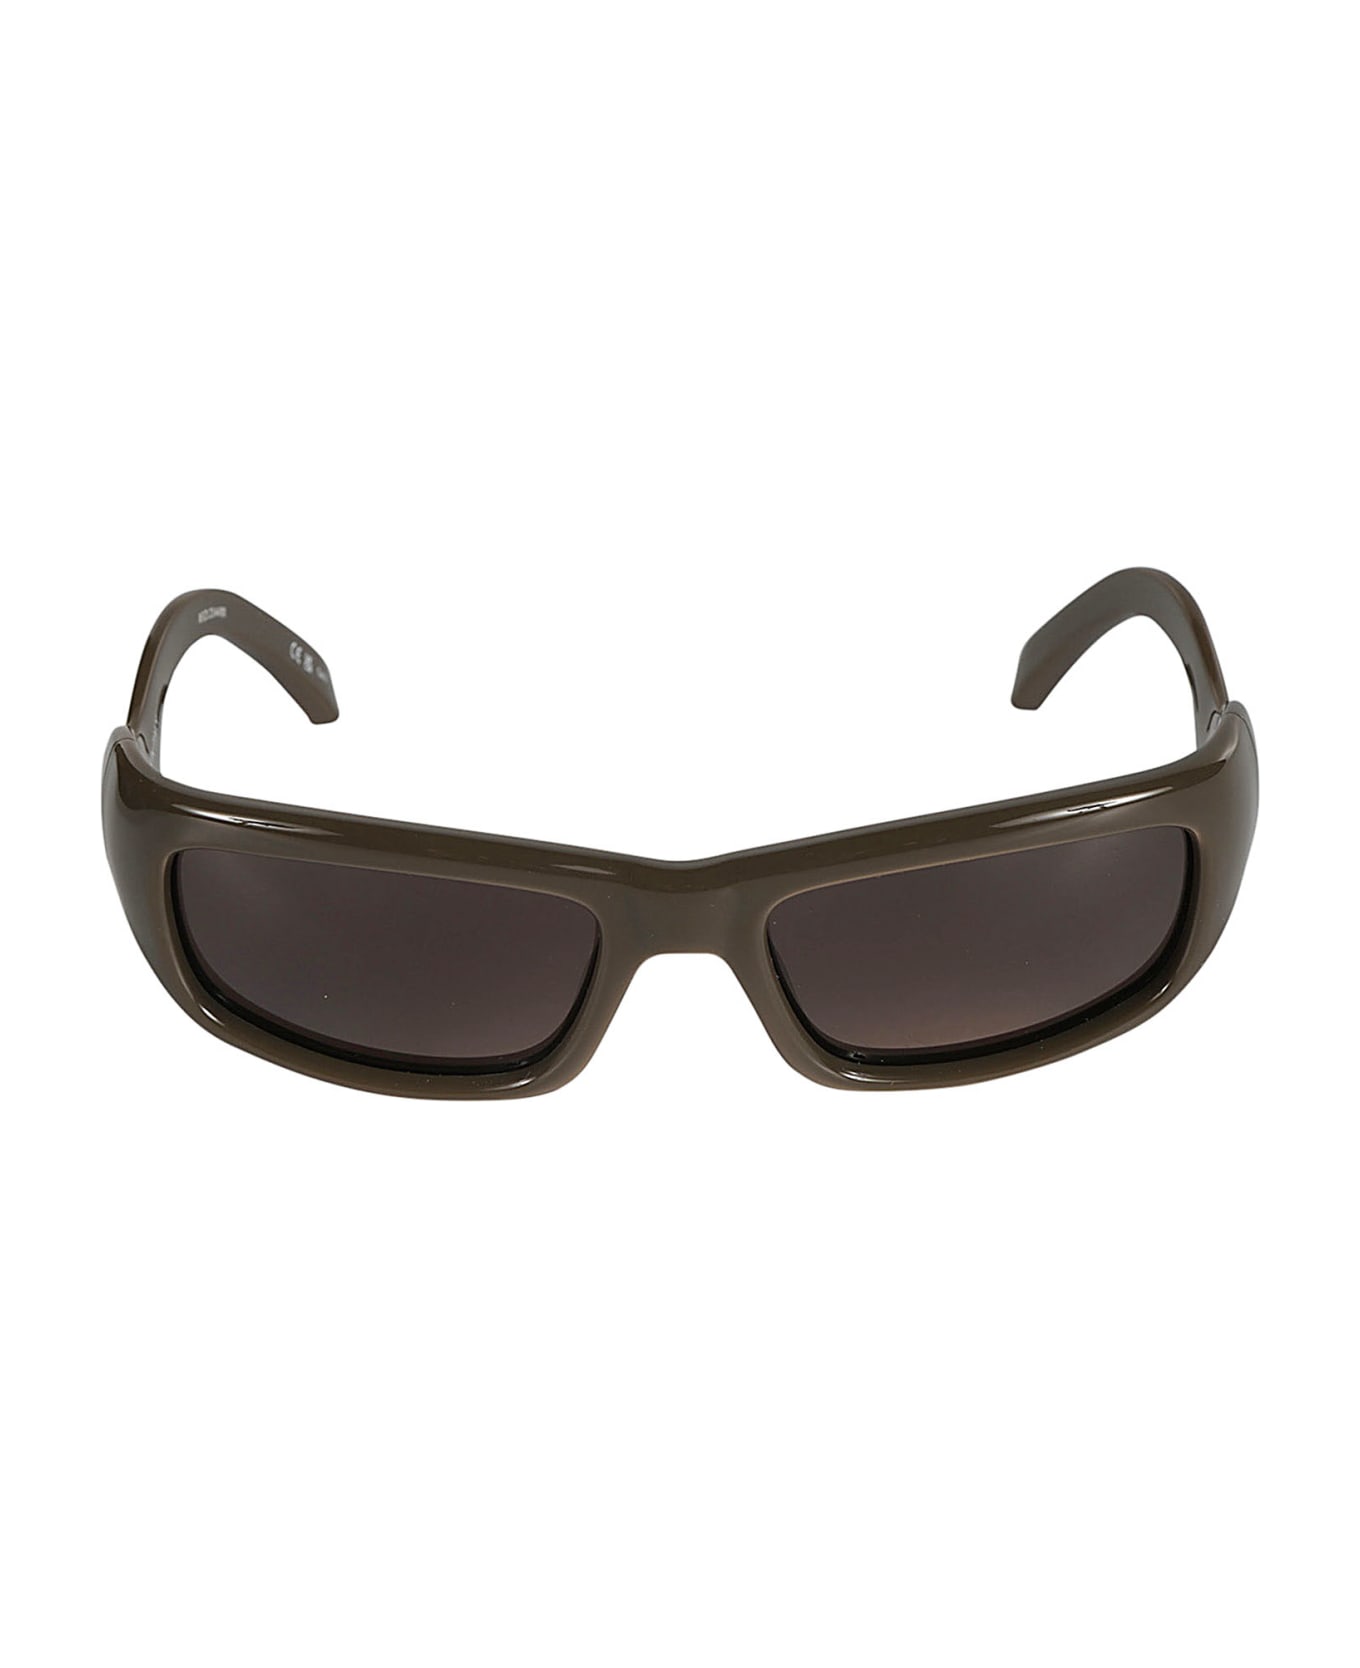 Balenciaga Eyewear Wavy Temple Logo Sided Sunglasses - 004 BROWN BROWN GREY